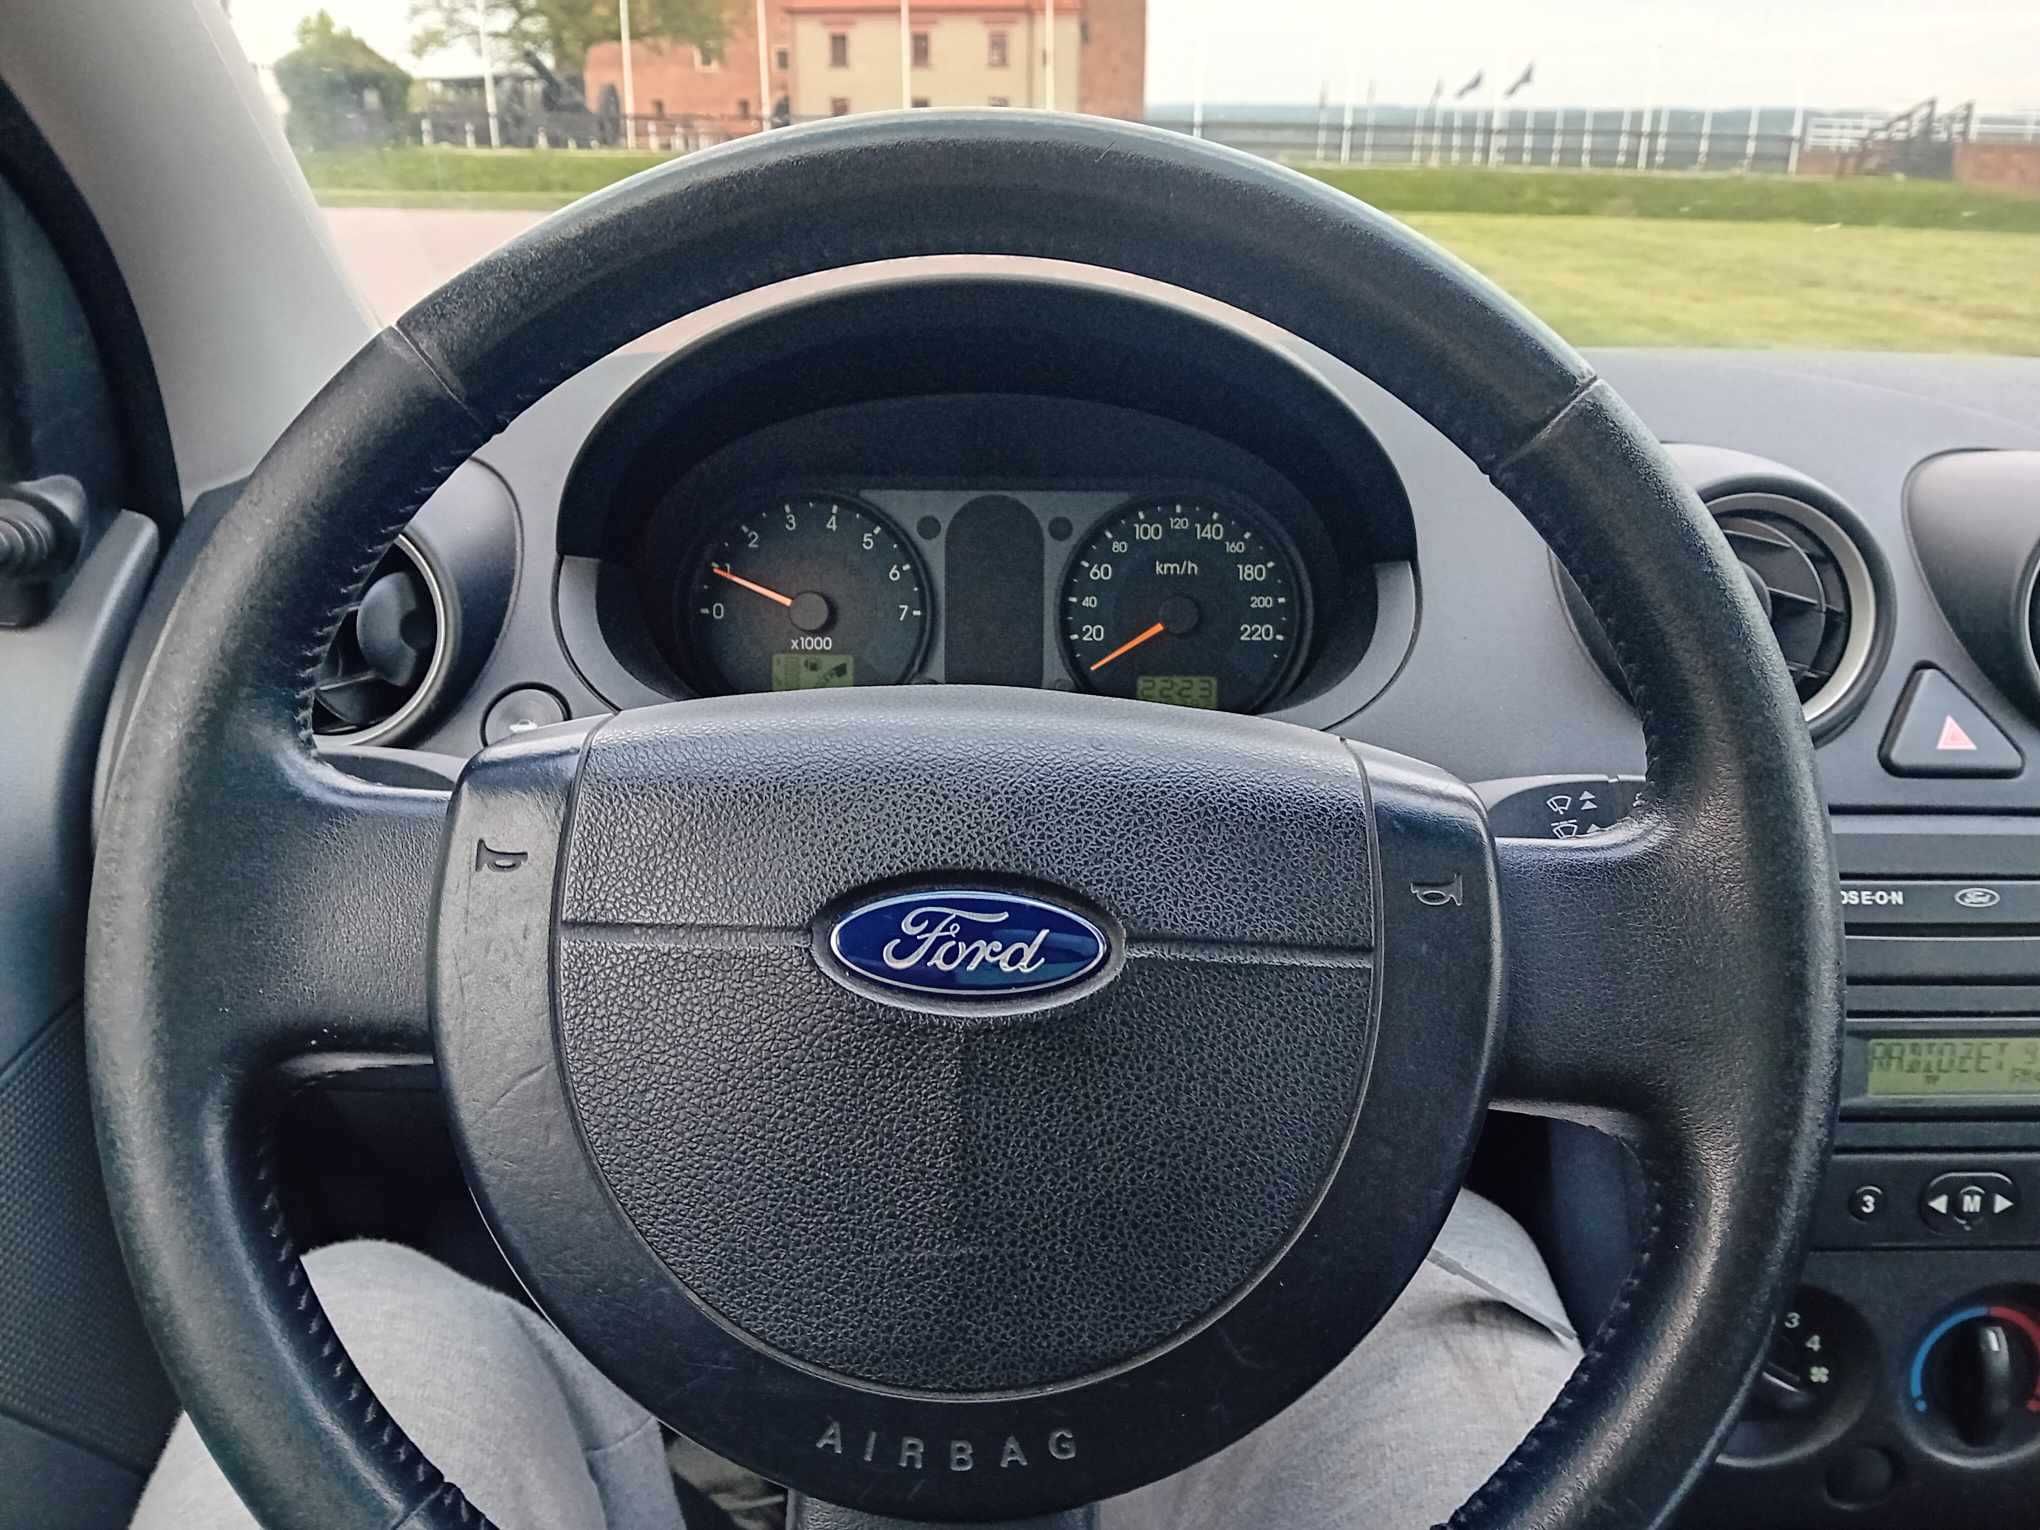 Ford Fiesta MK5 2002 1.4 benzyna